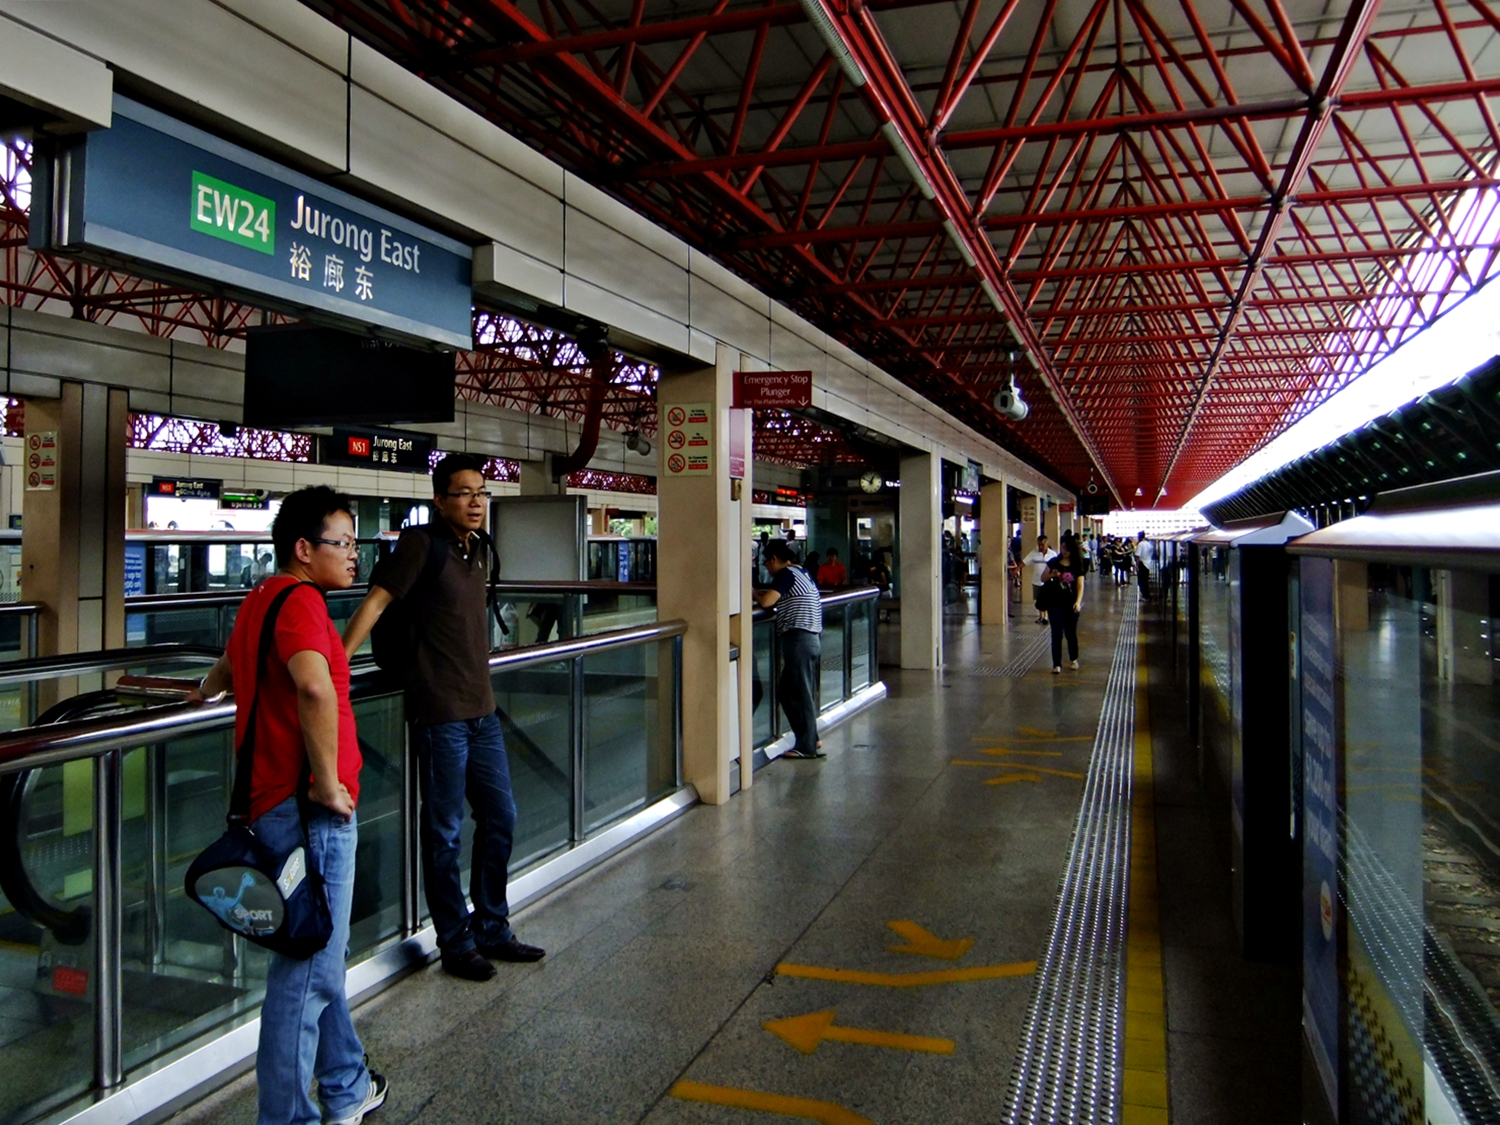 East west Green Line Singapore EW24 Jurong East MRT Station